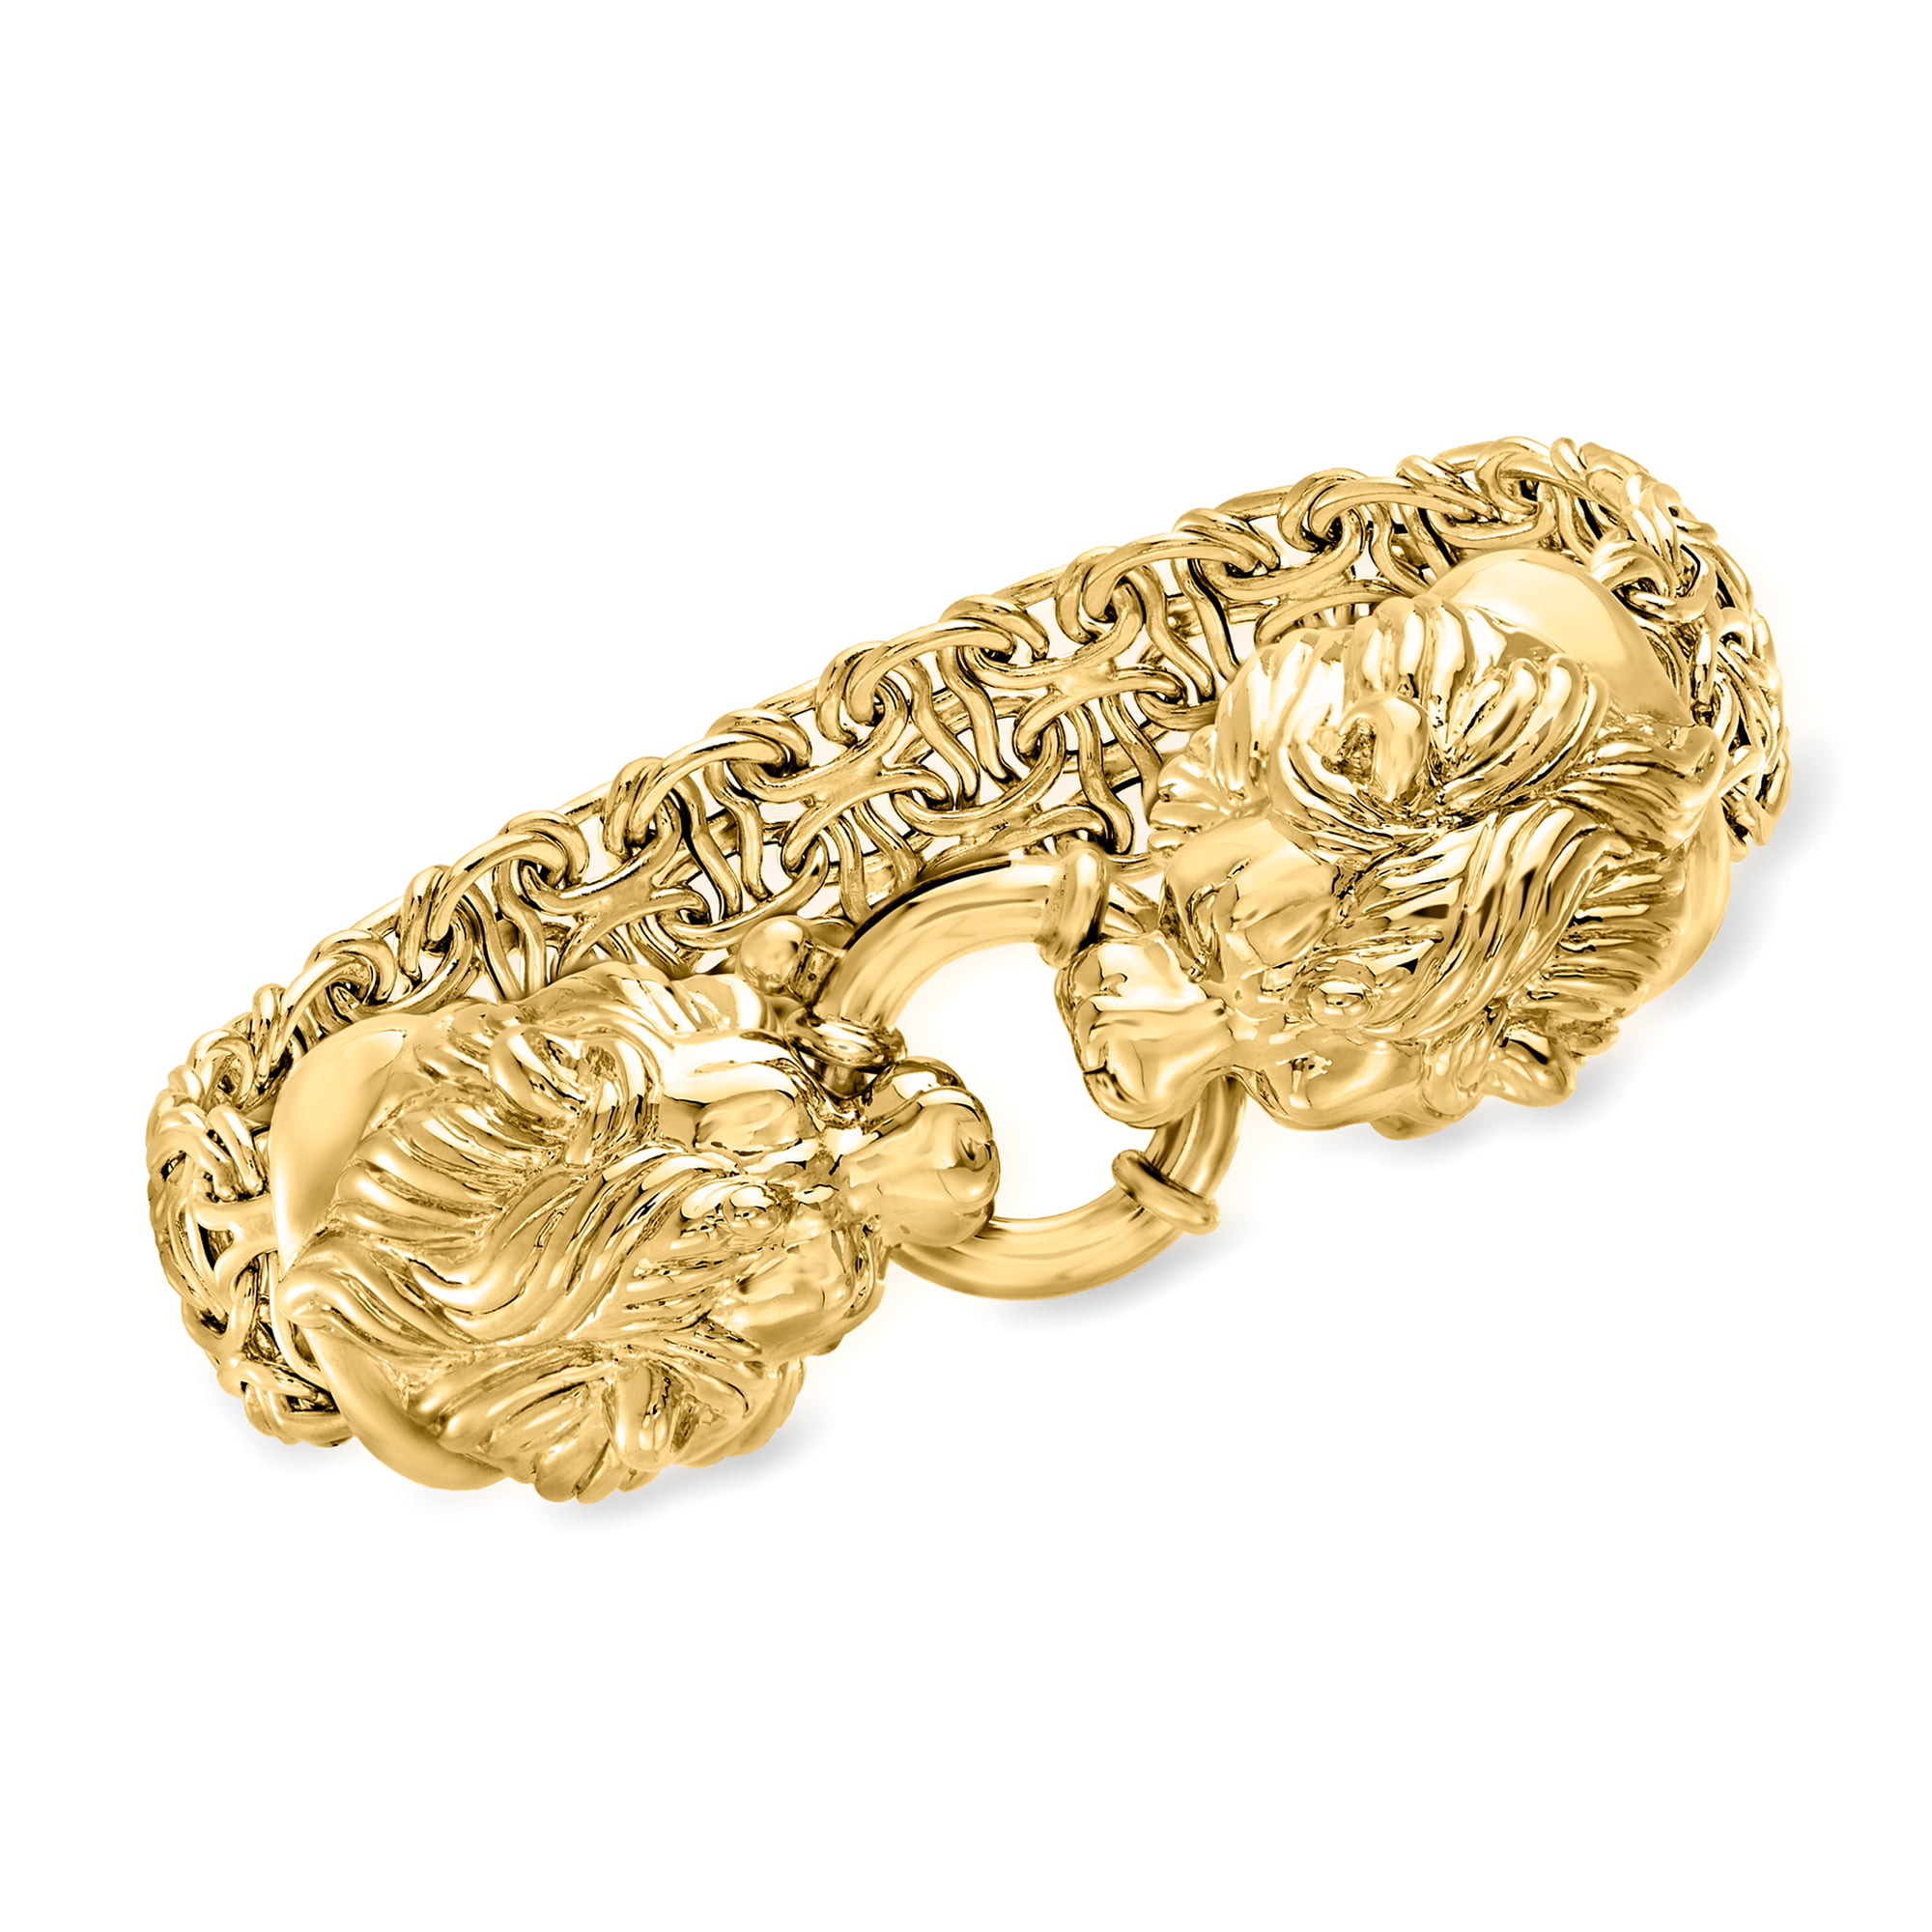 Lion head silver plated bangle bracelet at ?950 | Azilaa